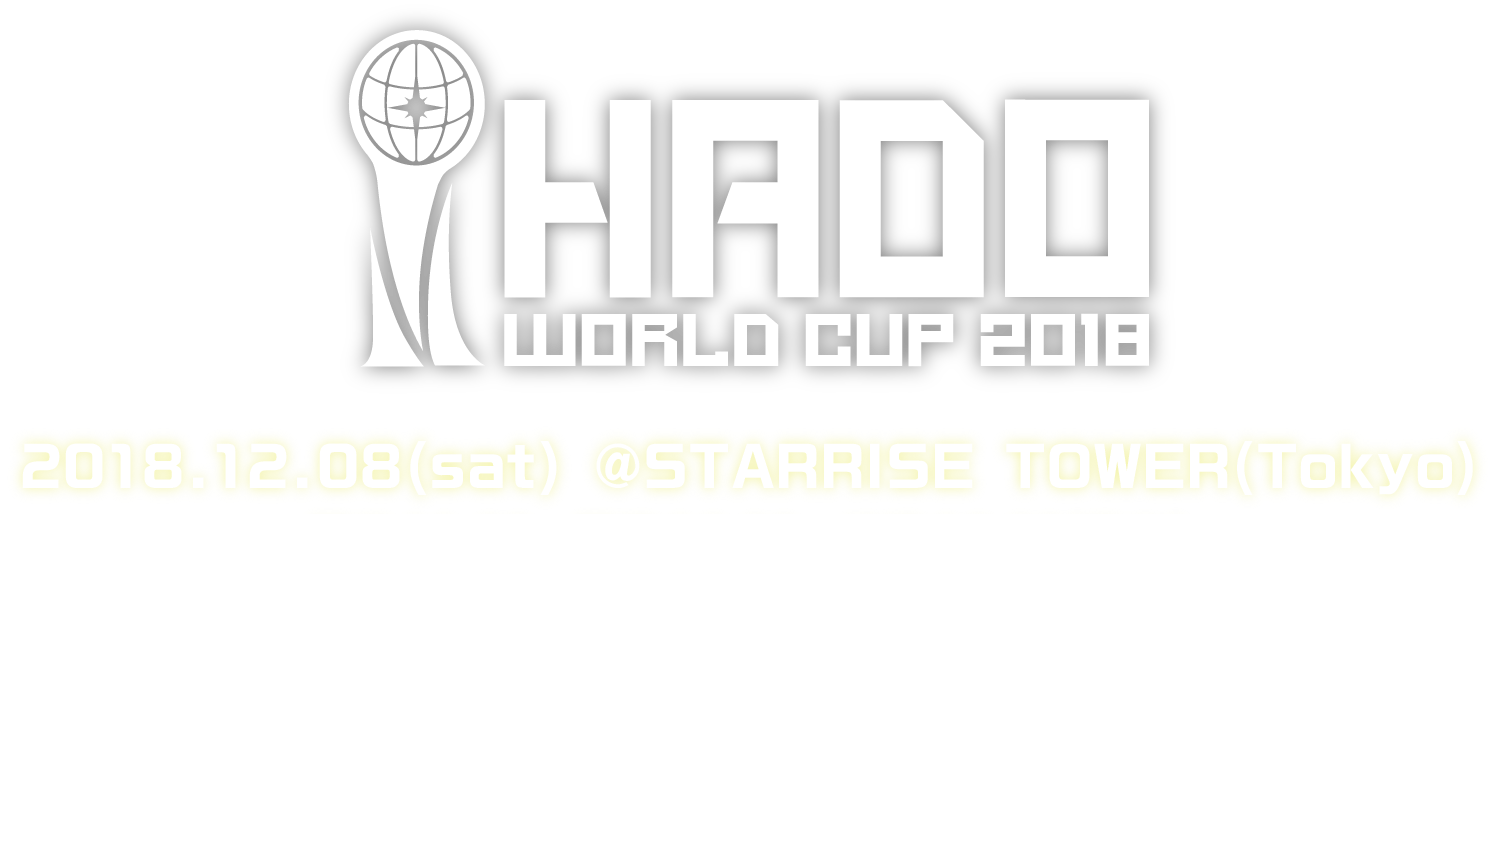 HADO WORLD CUP 2018 2018.12.08(sat) @STARRISE TOWER(Tokyo)